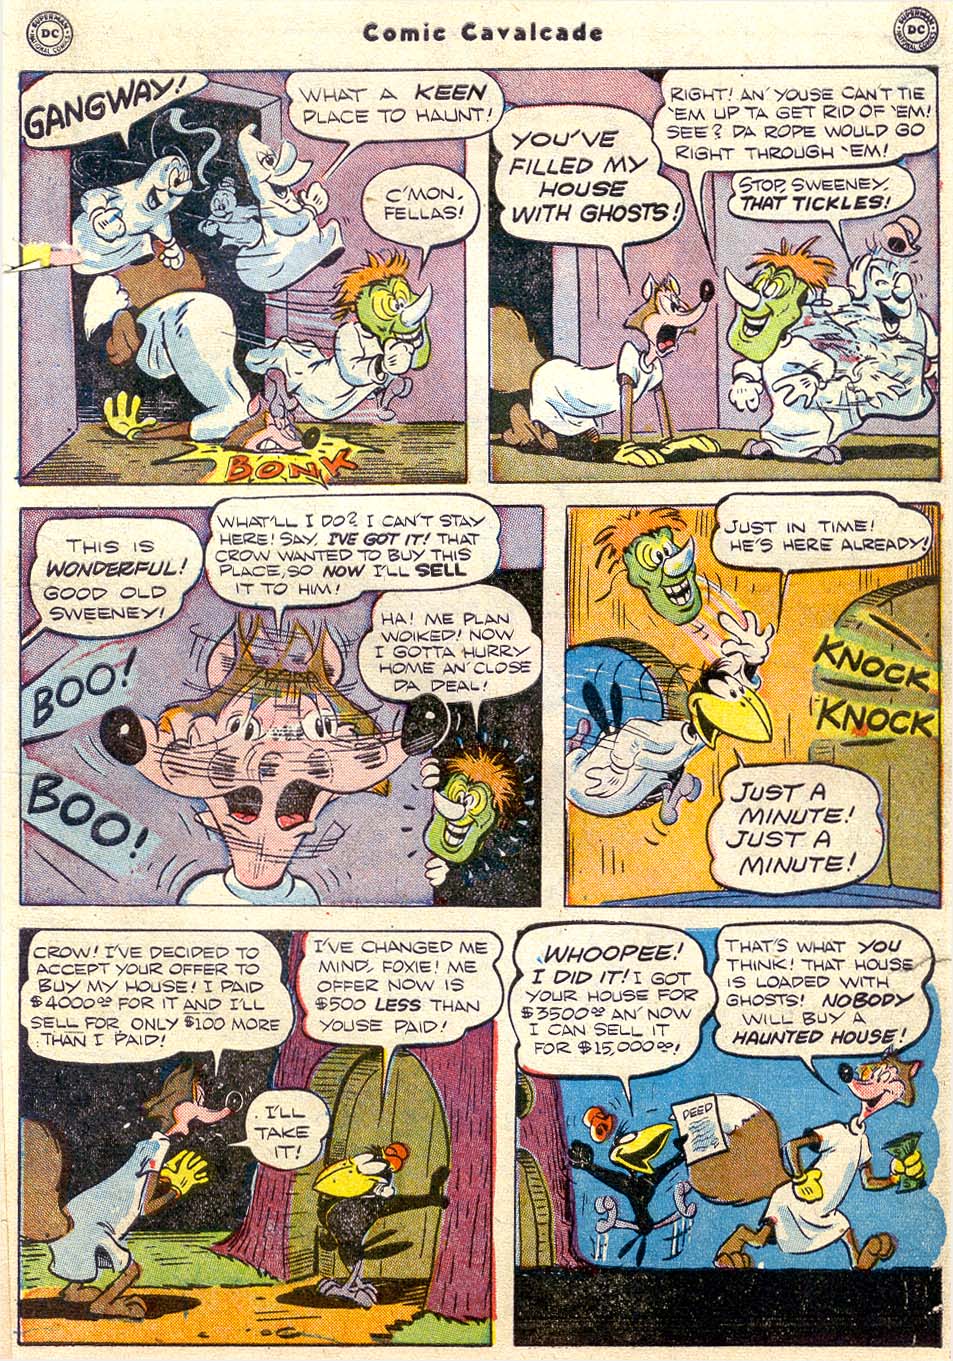 Comic Cavalcade issue 36 - Page 9